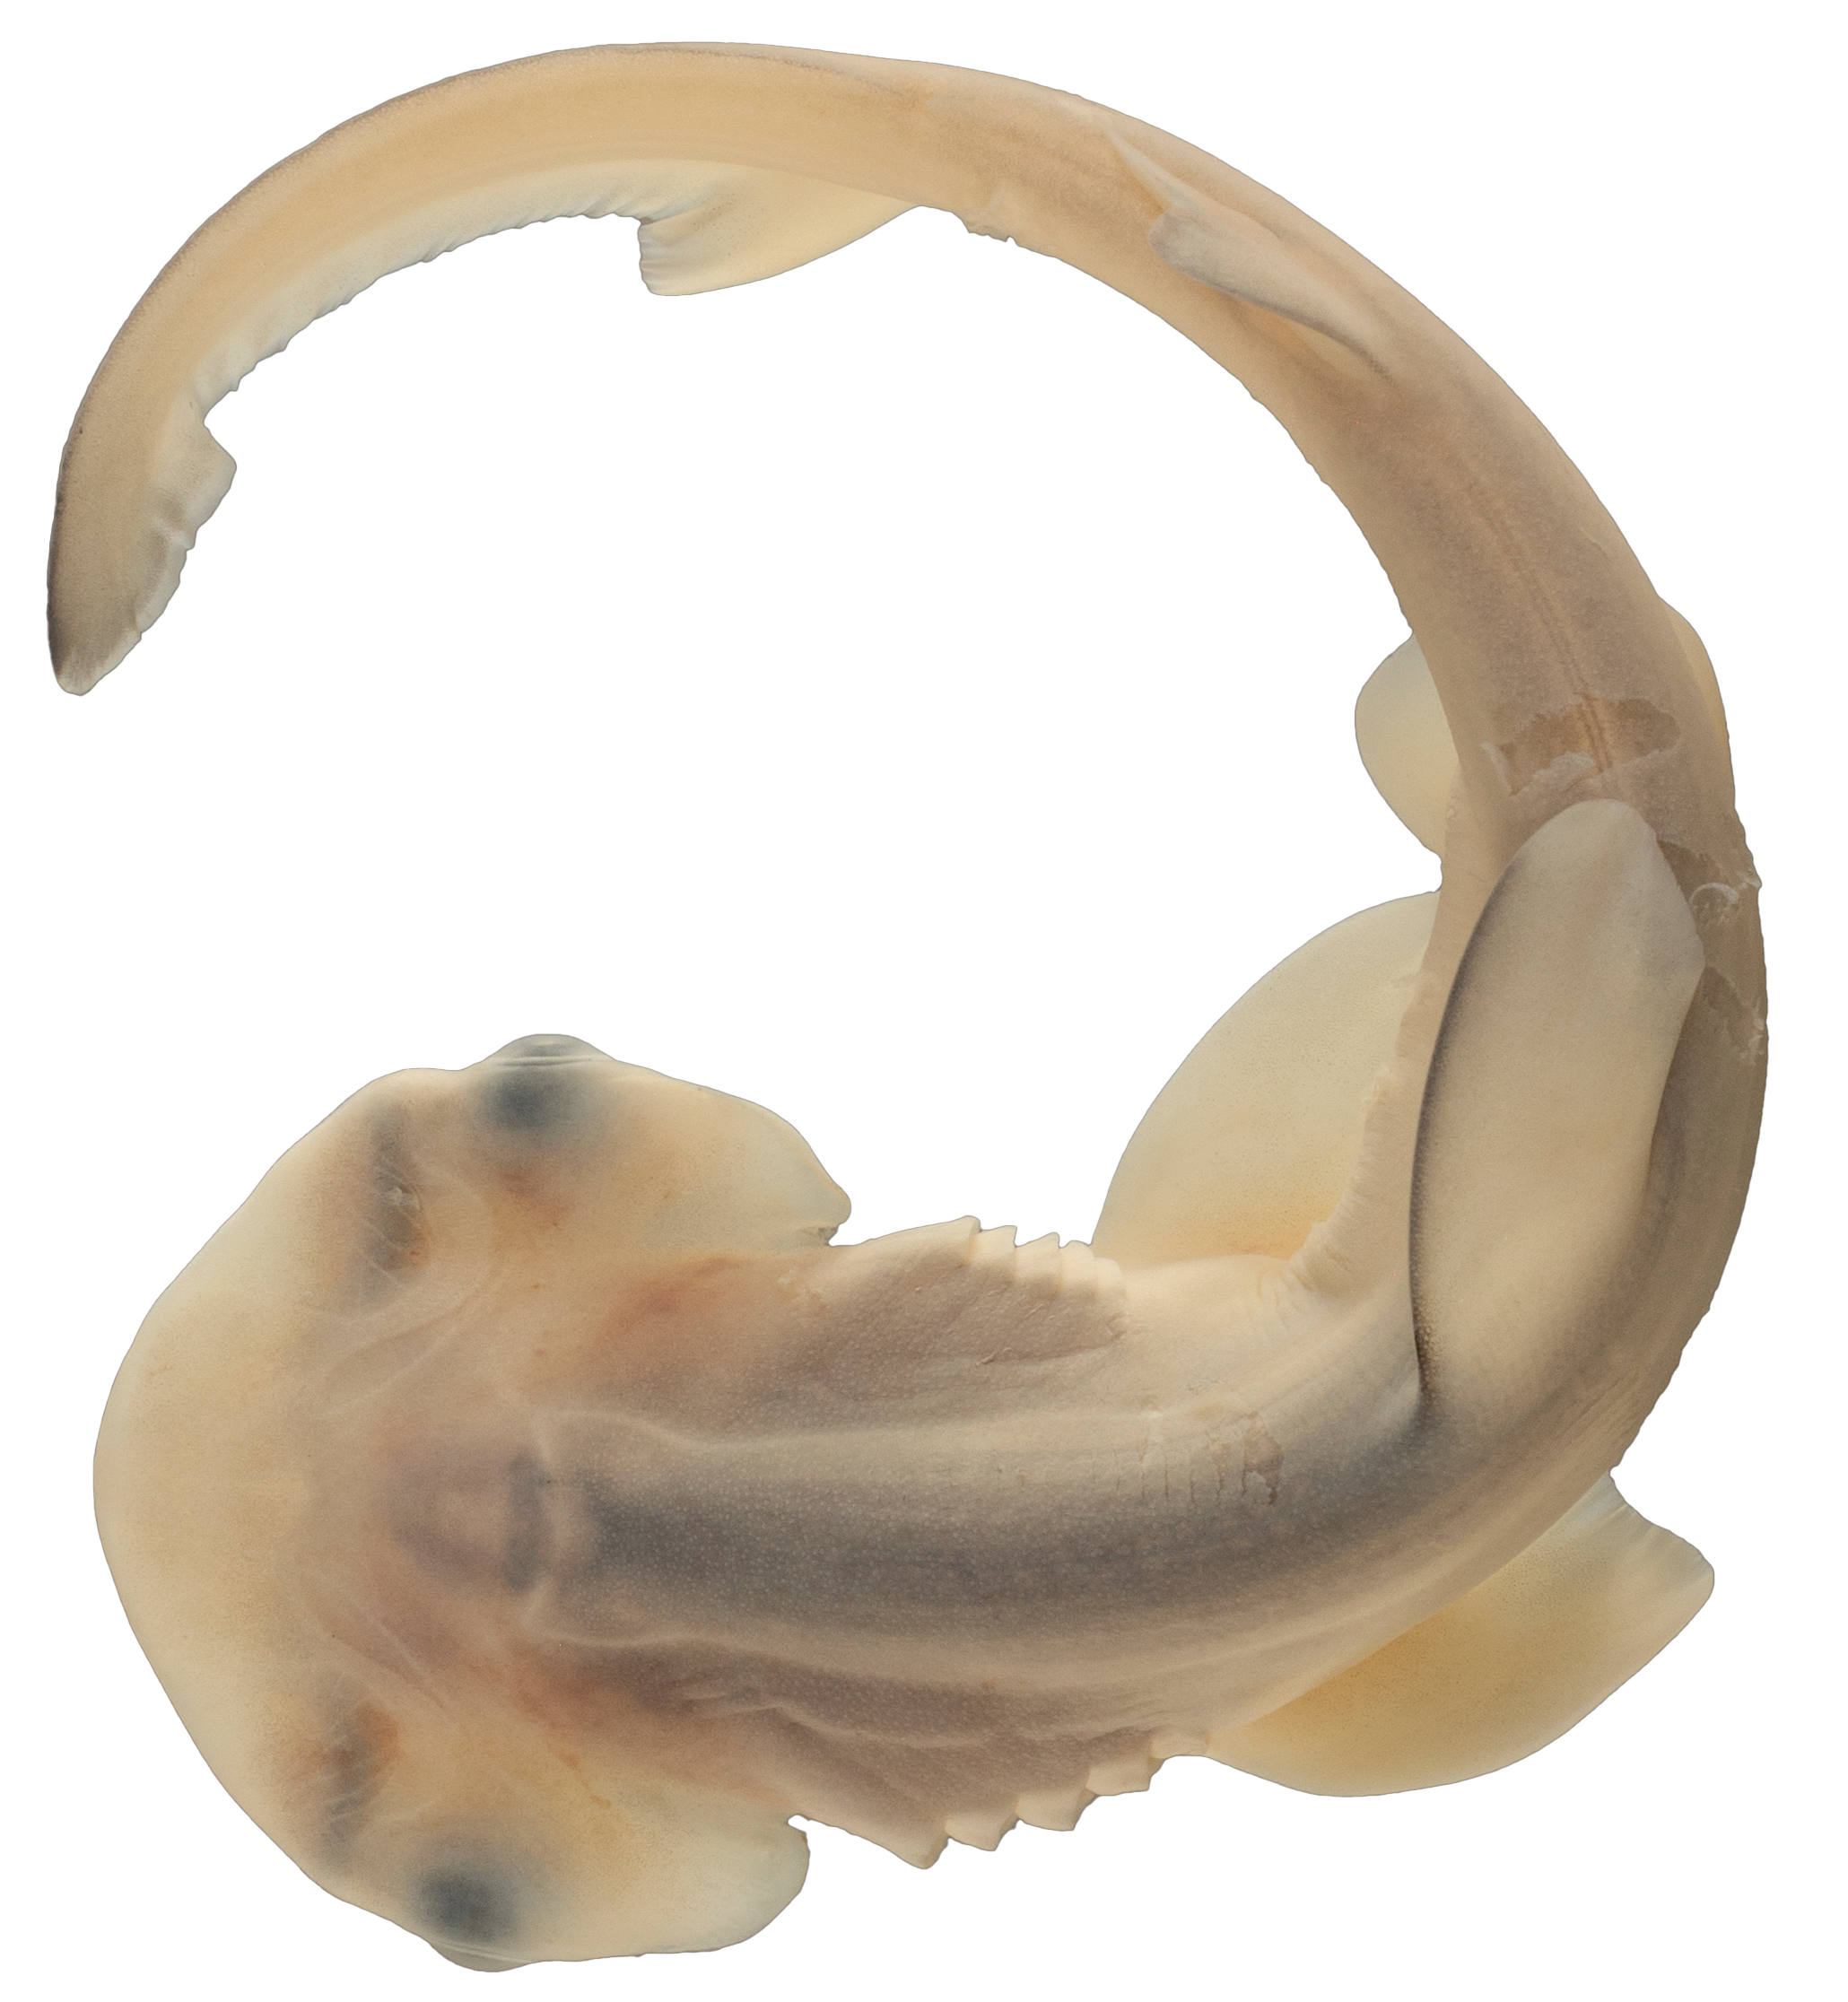 A bonnethead embryo, its translucent skin showing shadows of its internal organs.